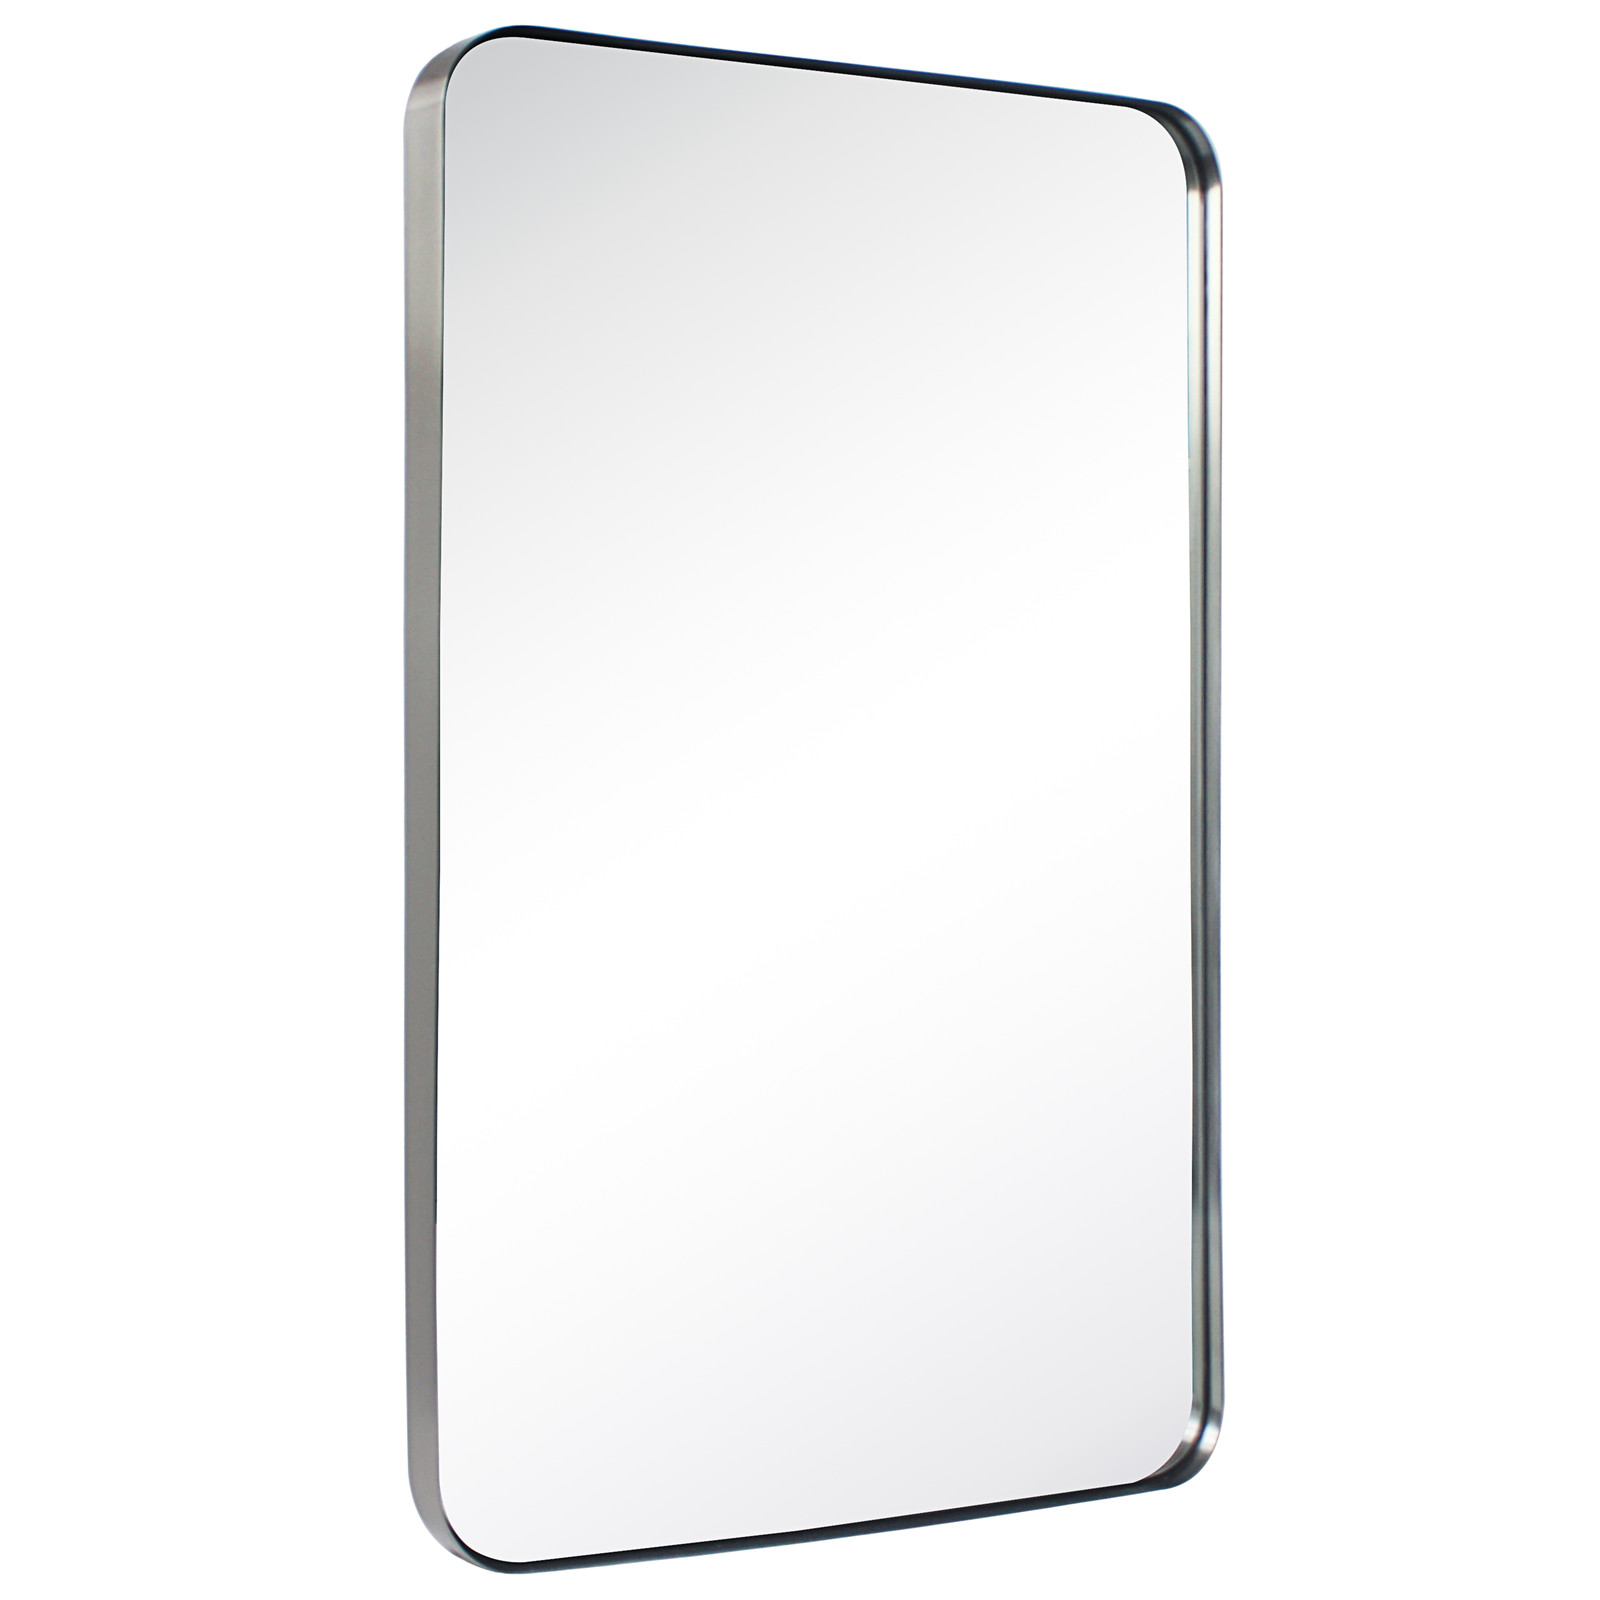 Kengston Modern & Contemporary Rectangular Bathroom Vanity Mirrors-20x30-Brushed Nickel